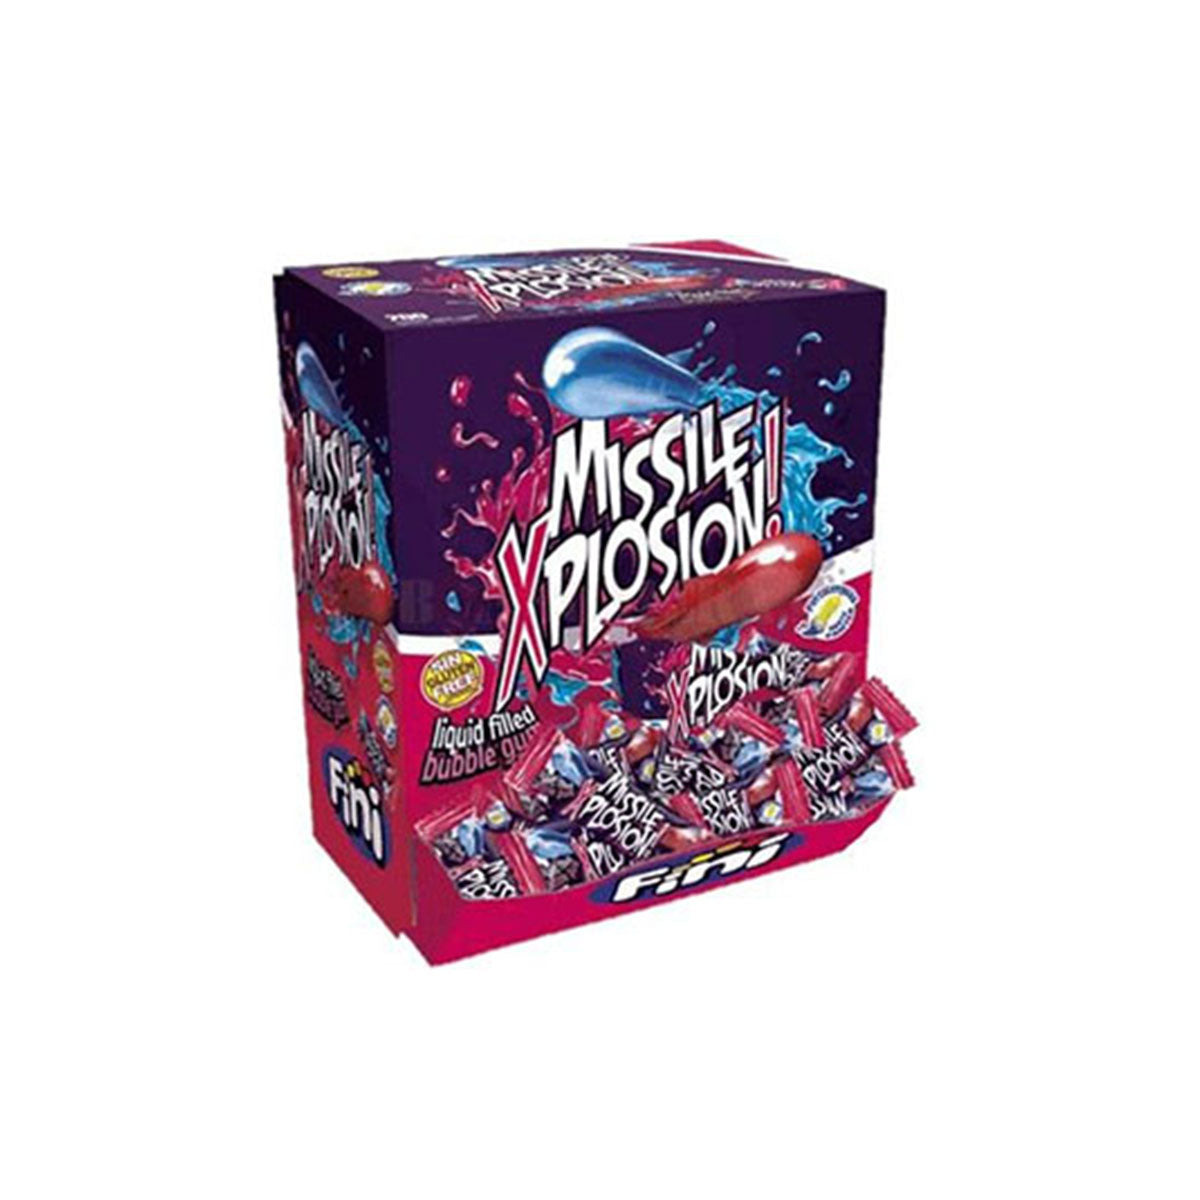 Fini Bubble Gum Missile Xplosion Box